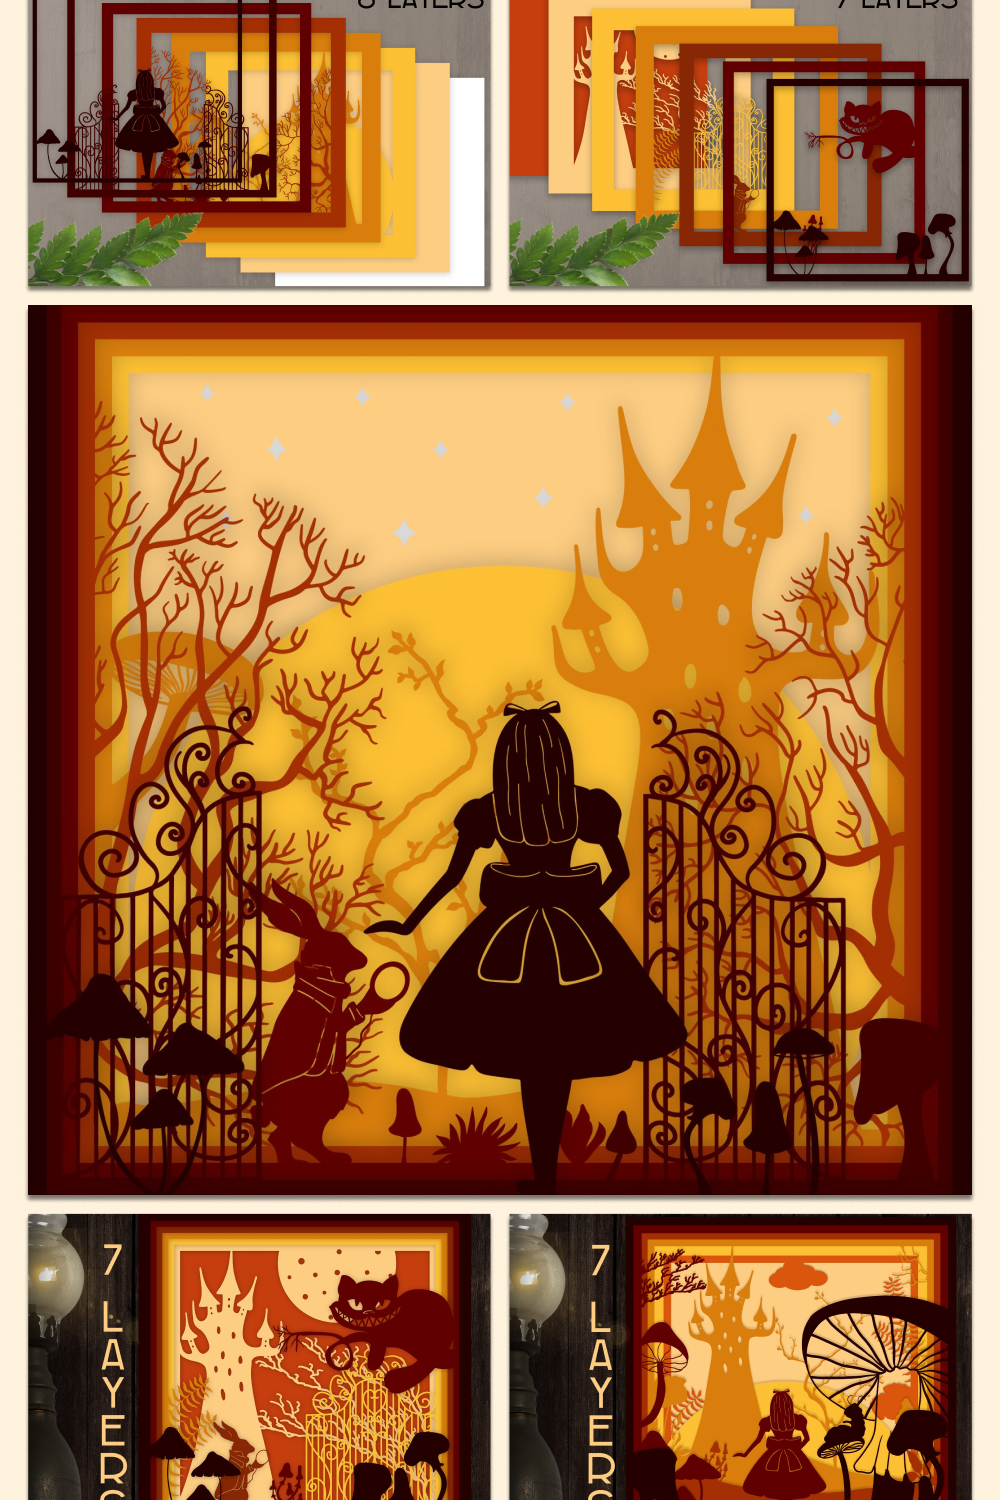 Alice walks through the gate in silhouette.